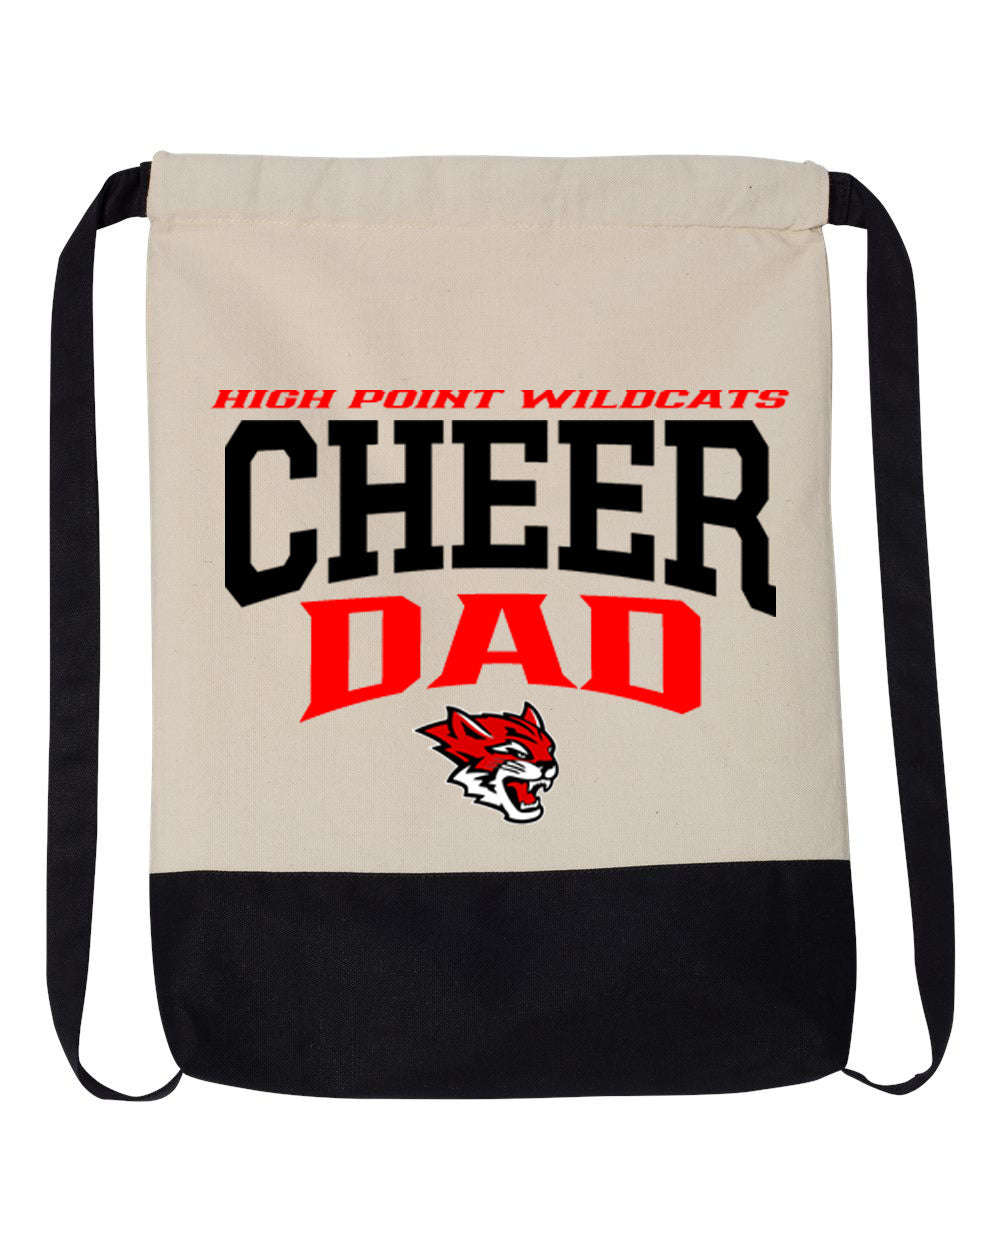 Wildcats Cheer design 6 Drawstring Bag